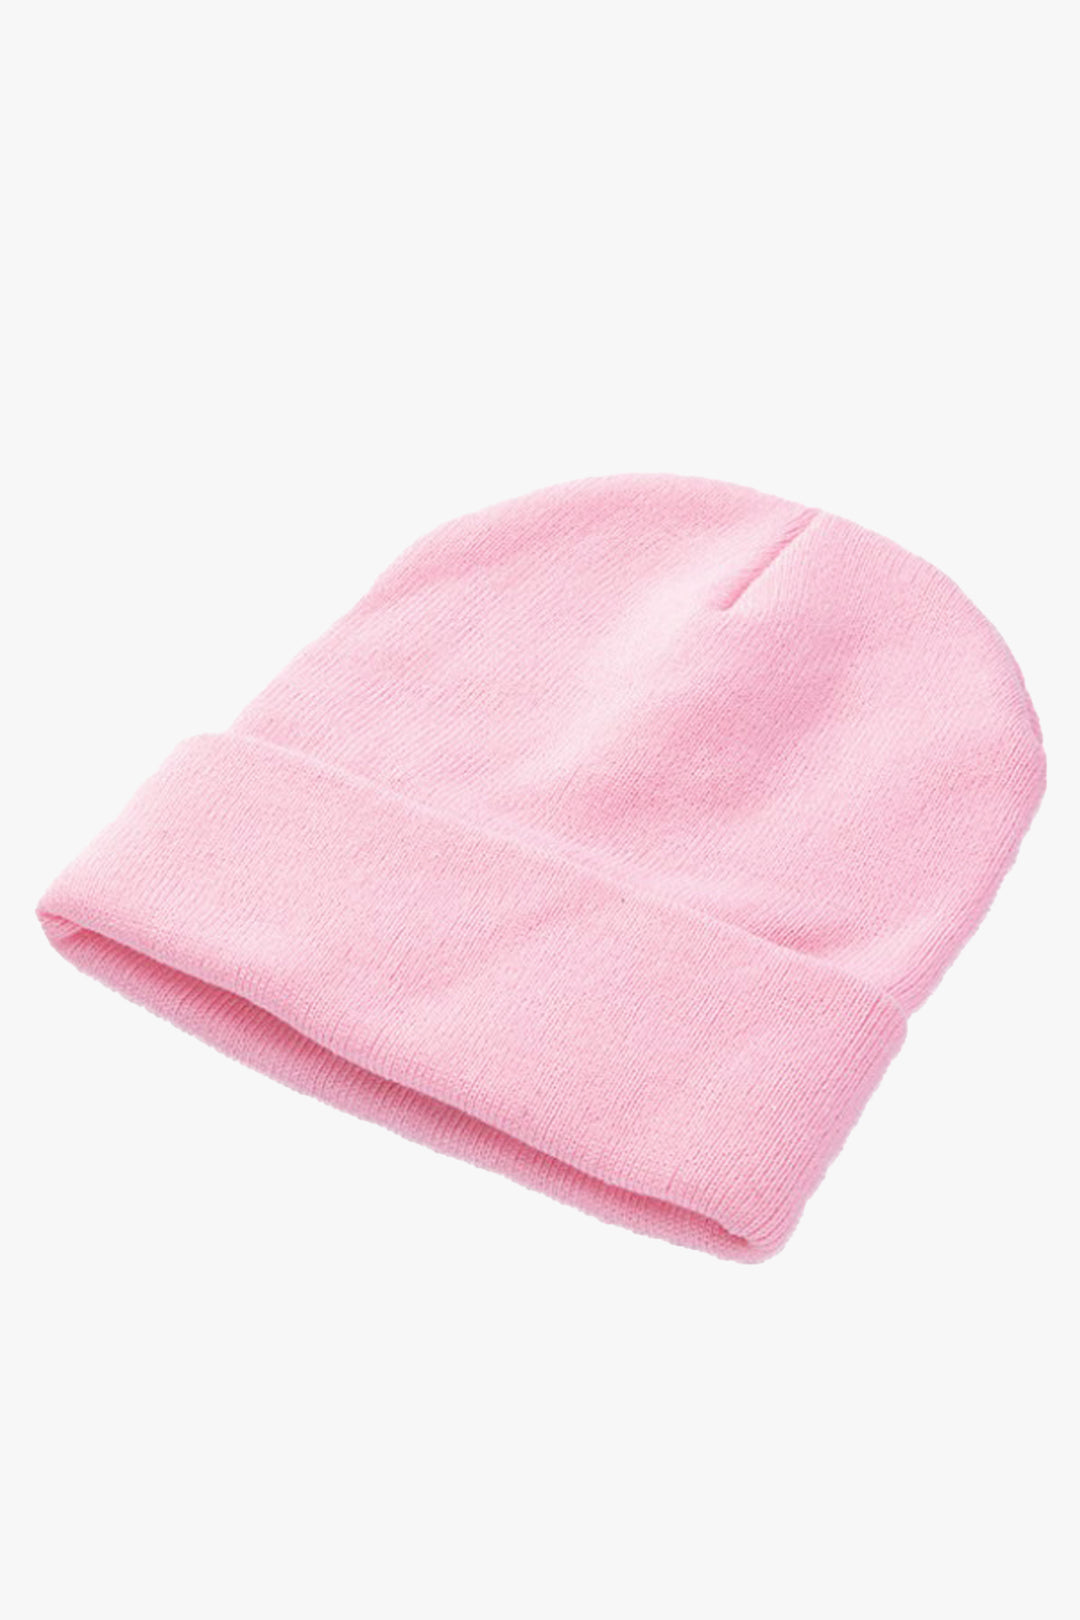 Plain Pink Knitted Beanie - W22 - UBH0014